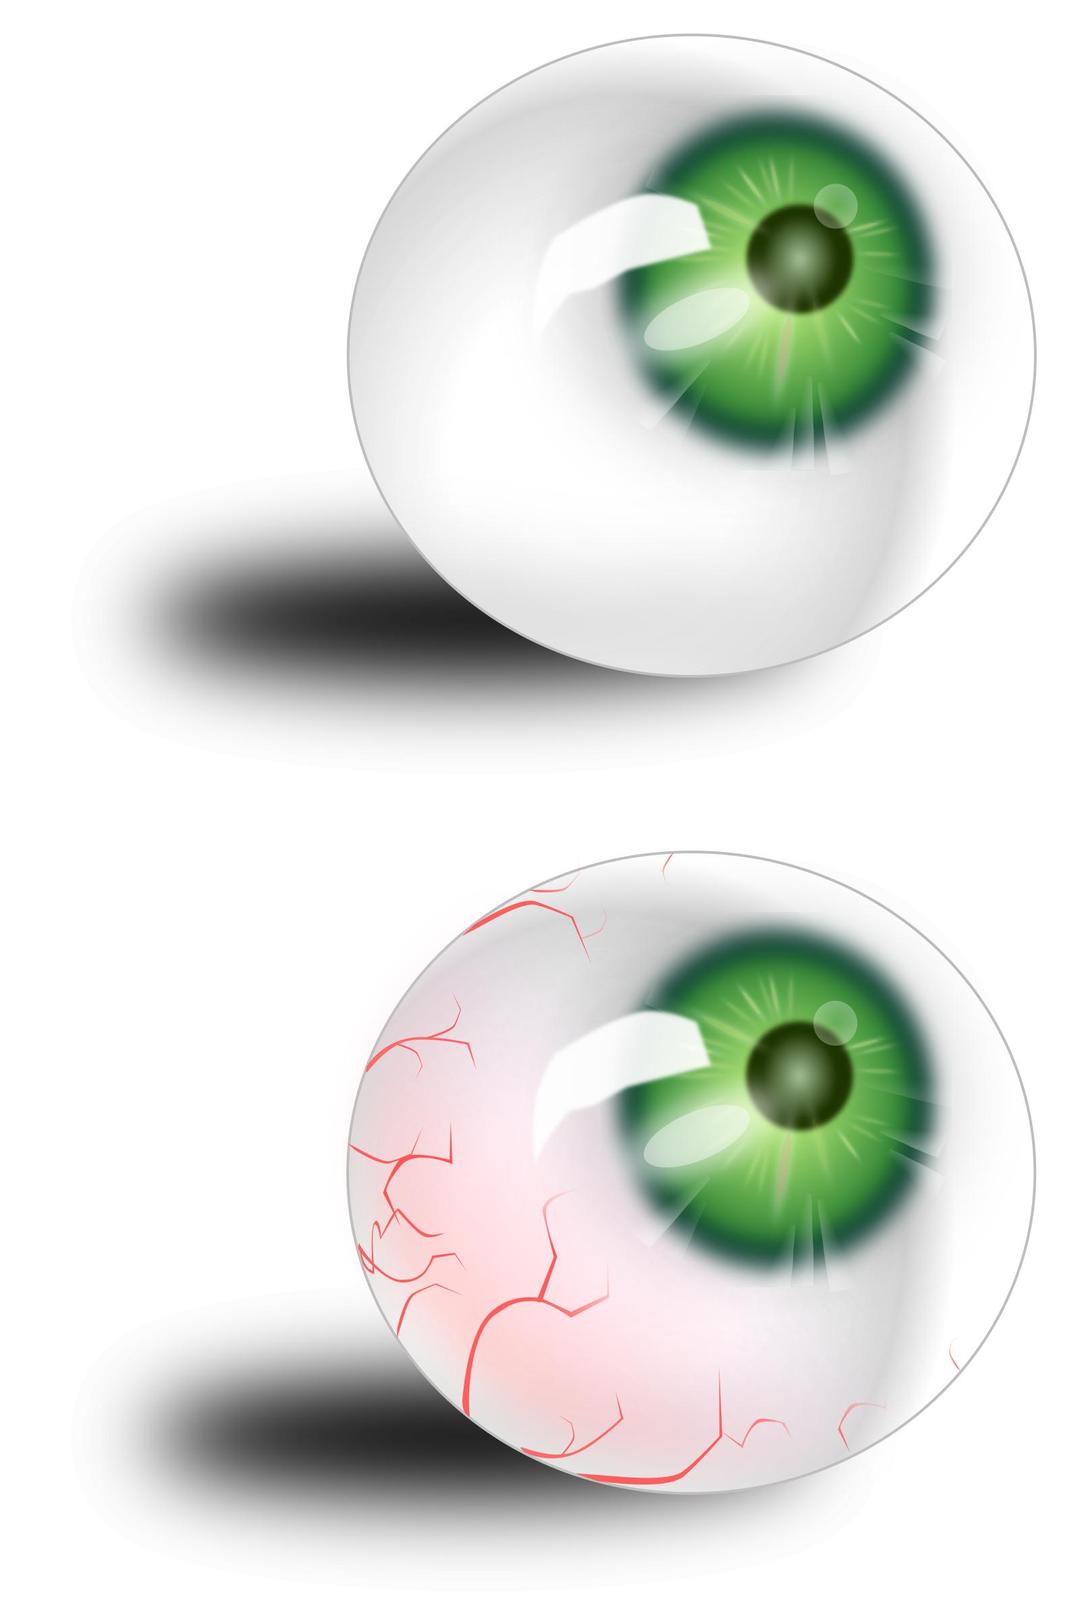 Eyeball green & bloodshot png transparent